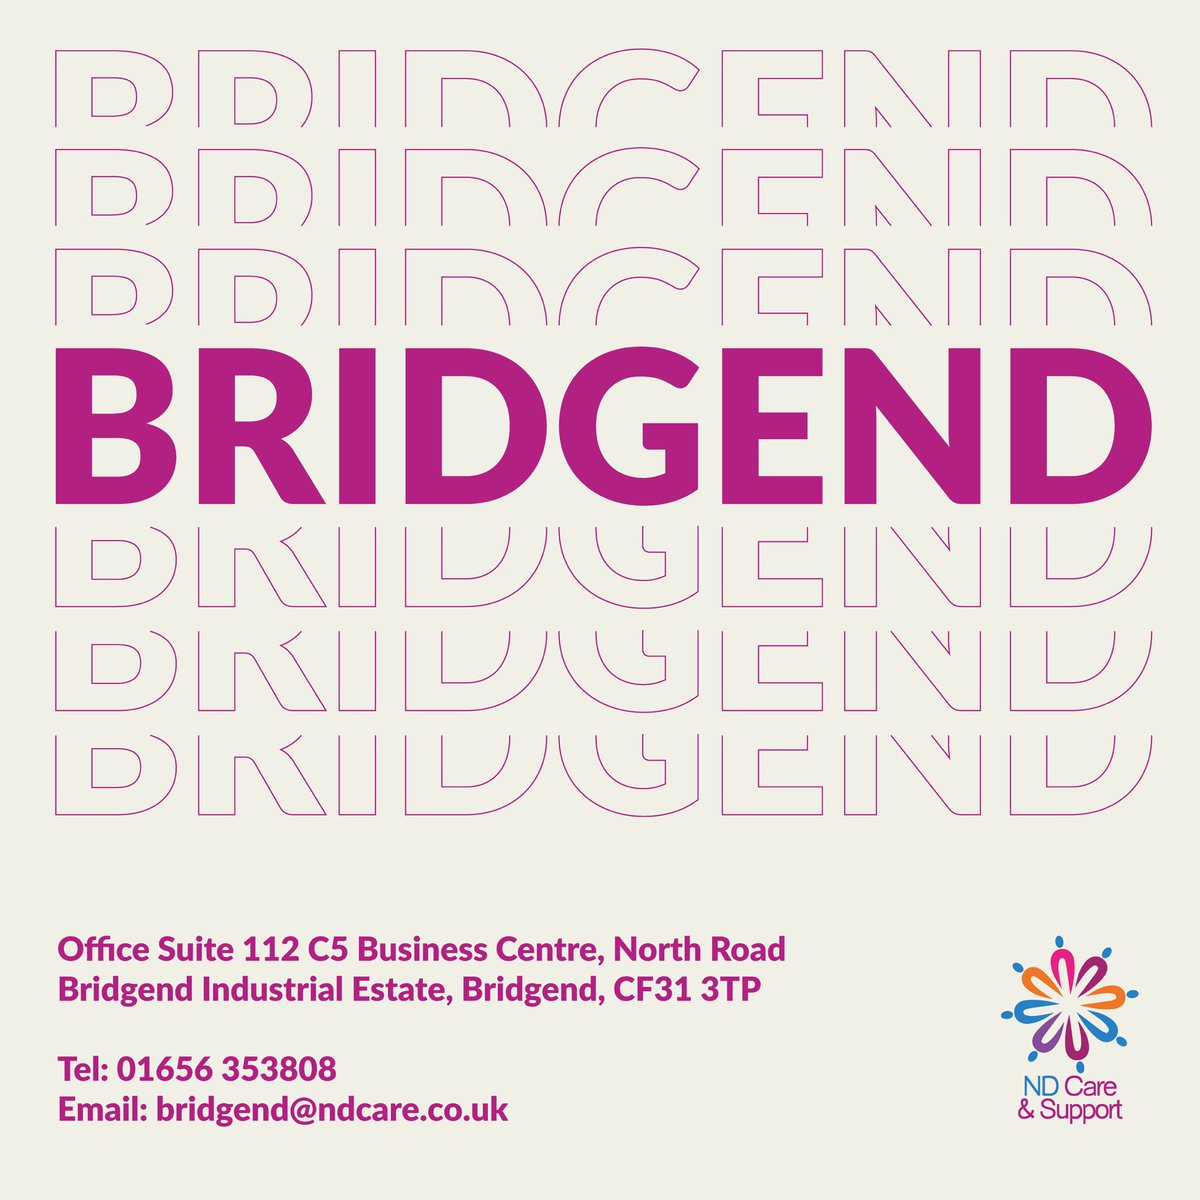 Find us in Bridgend📍

#bridgend #caresupport #newdirections